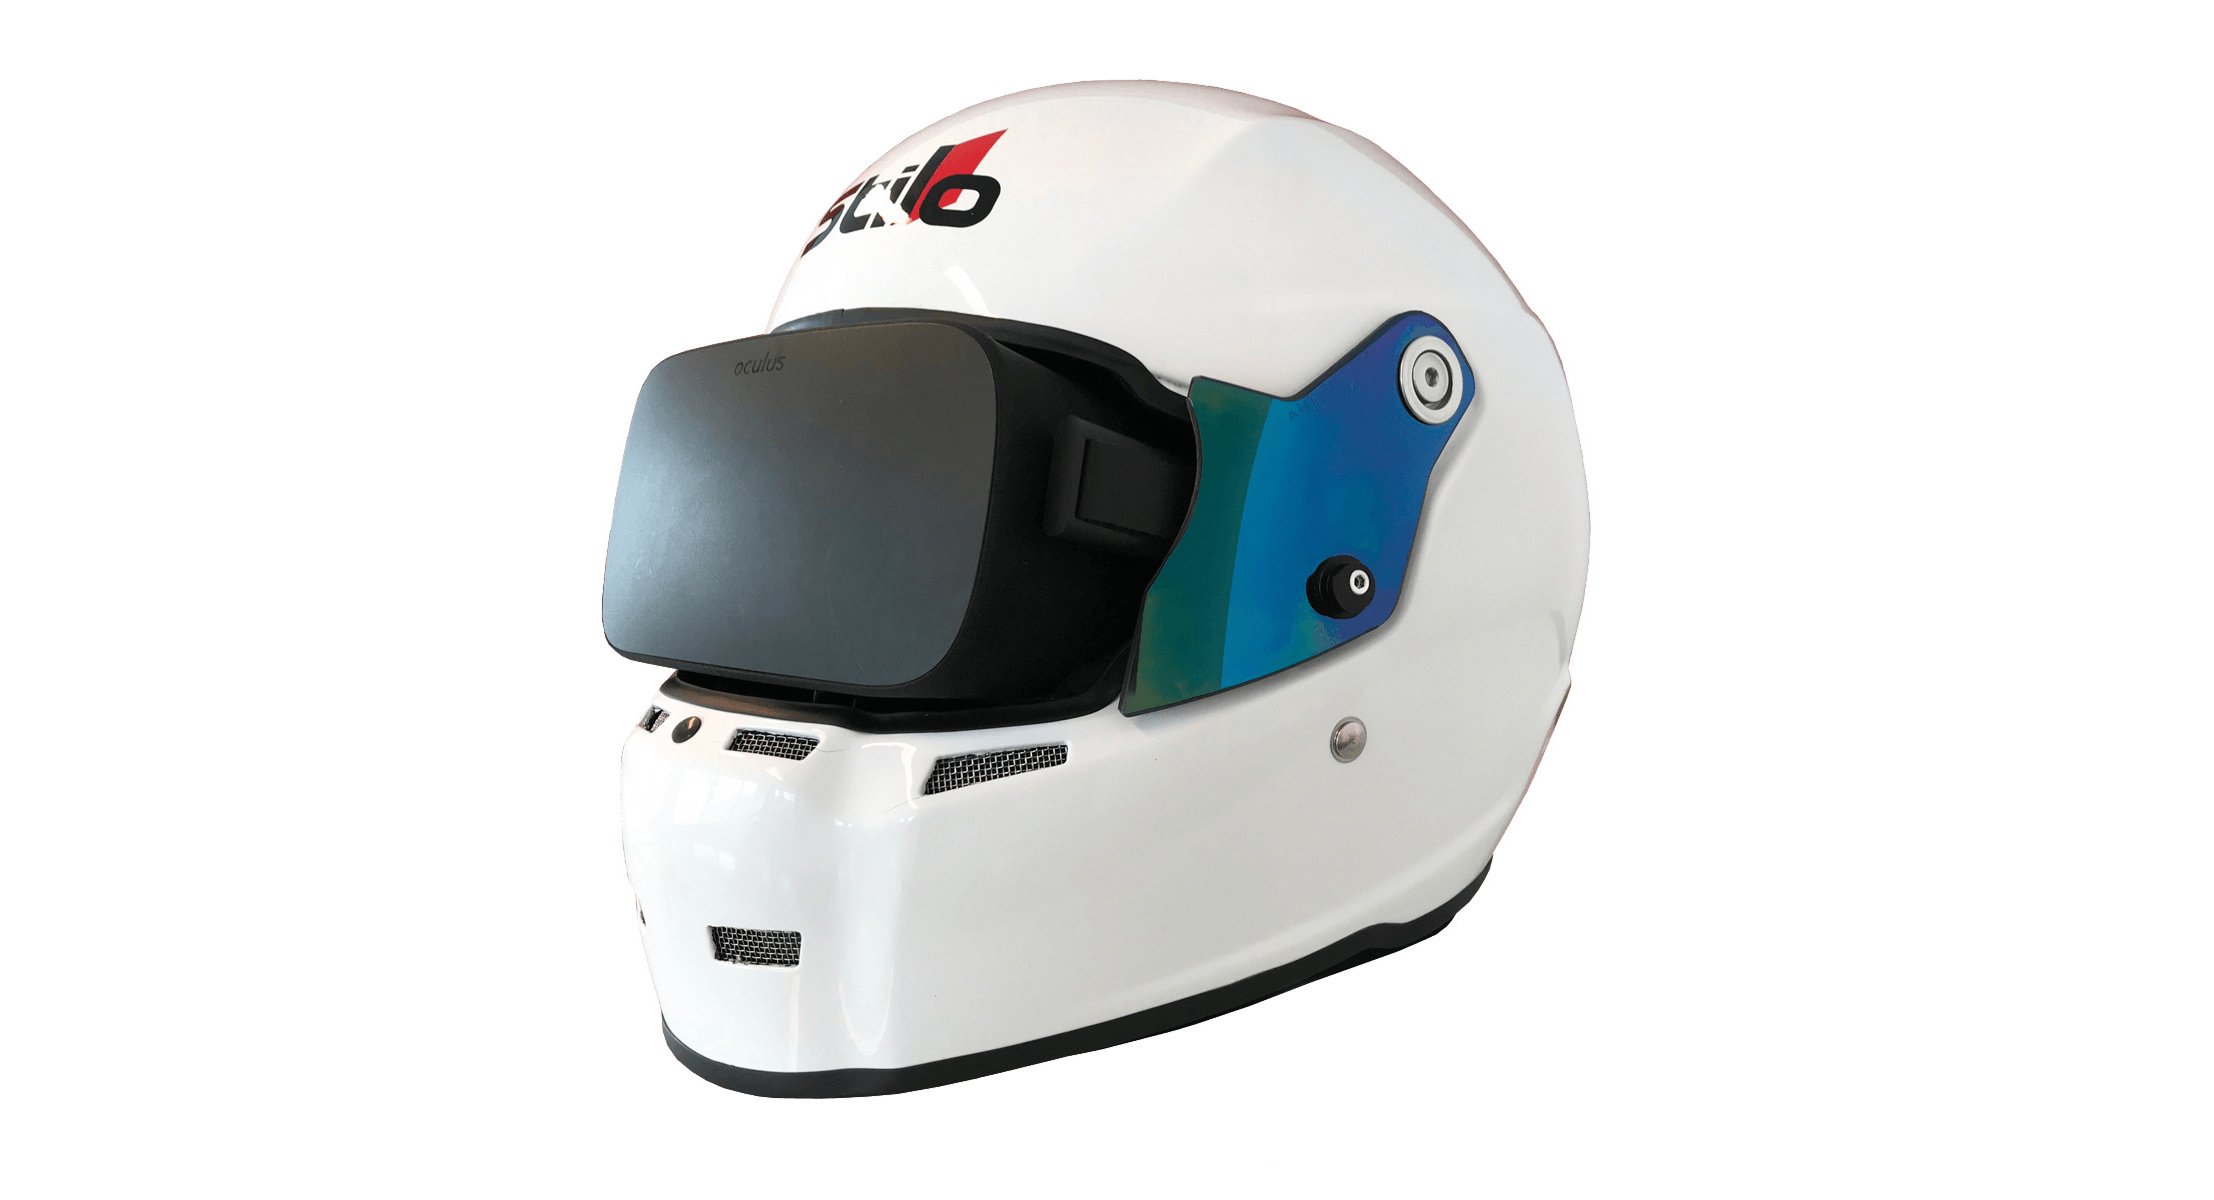 The New Stilo St5vr An Immersive Vr Sim Racing Helmet